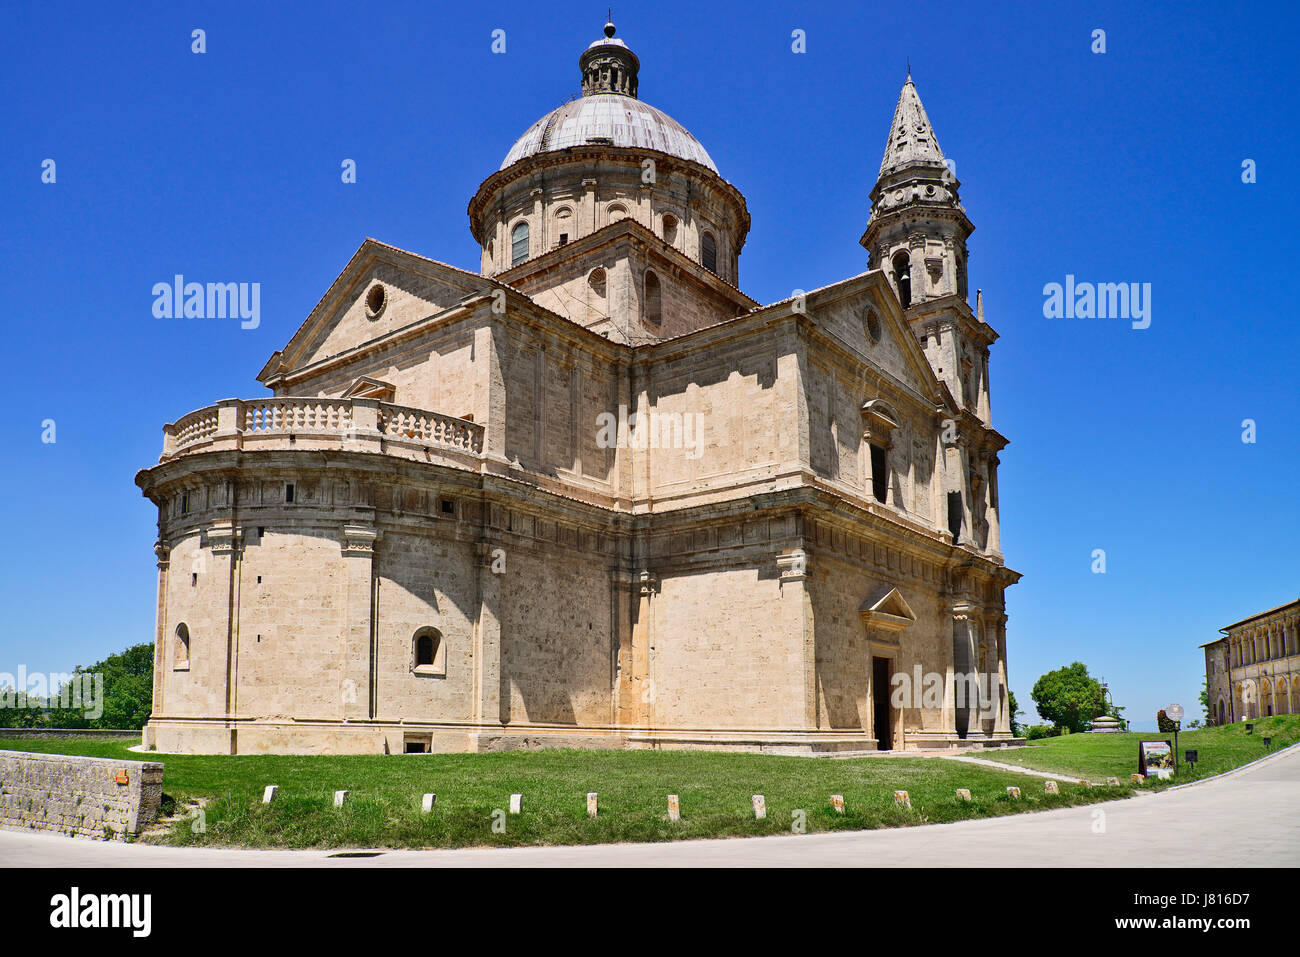 Italy, Tuscany, Montepulciano, Tempio di San Biagio Church. High Renaissance church with domed roof. Stock Photo